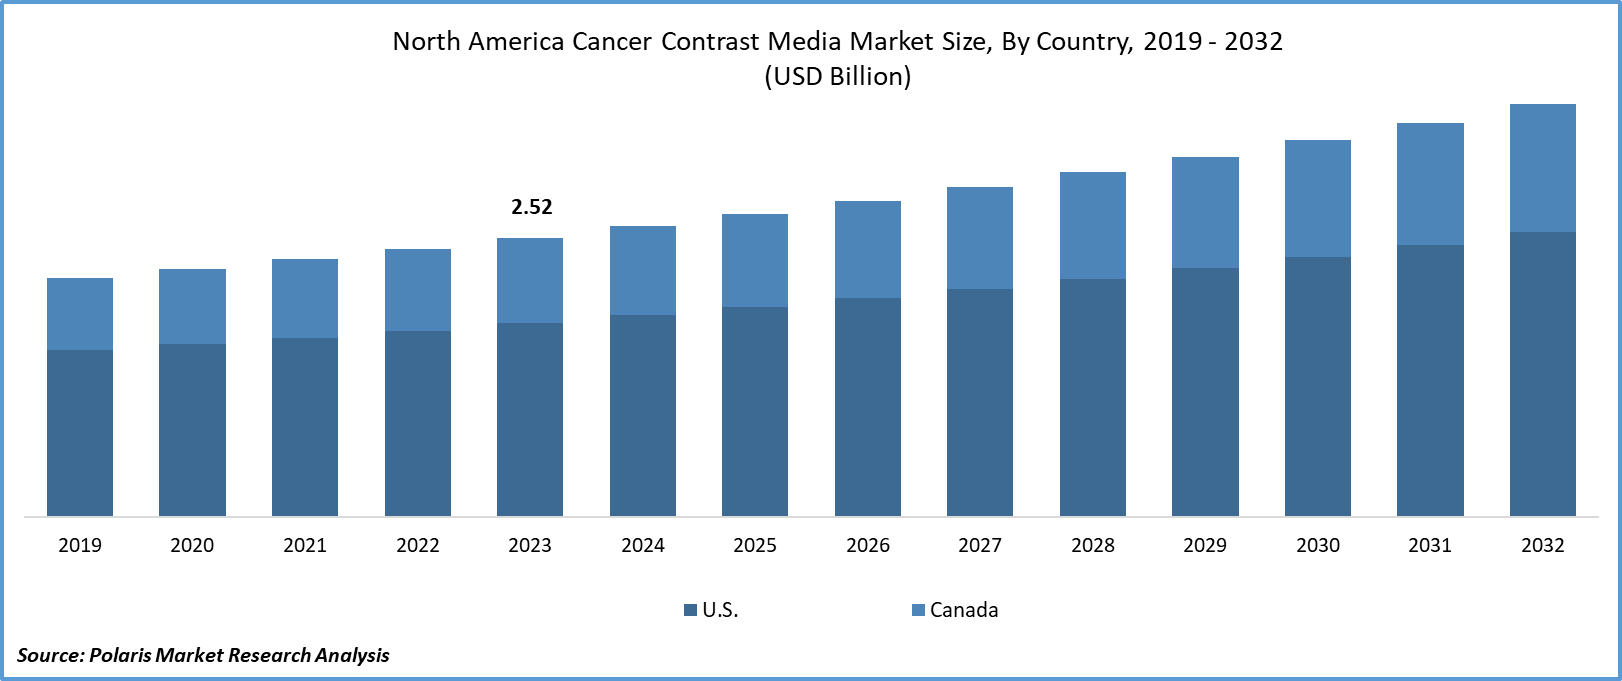 North America Cancer Contrast Media Market Size